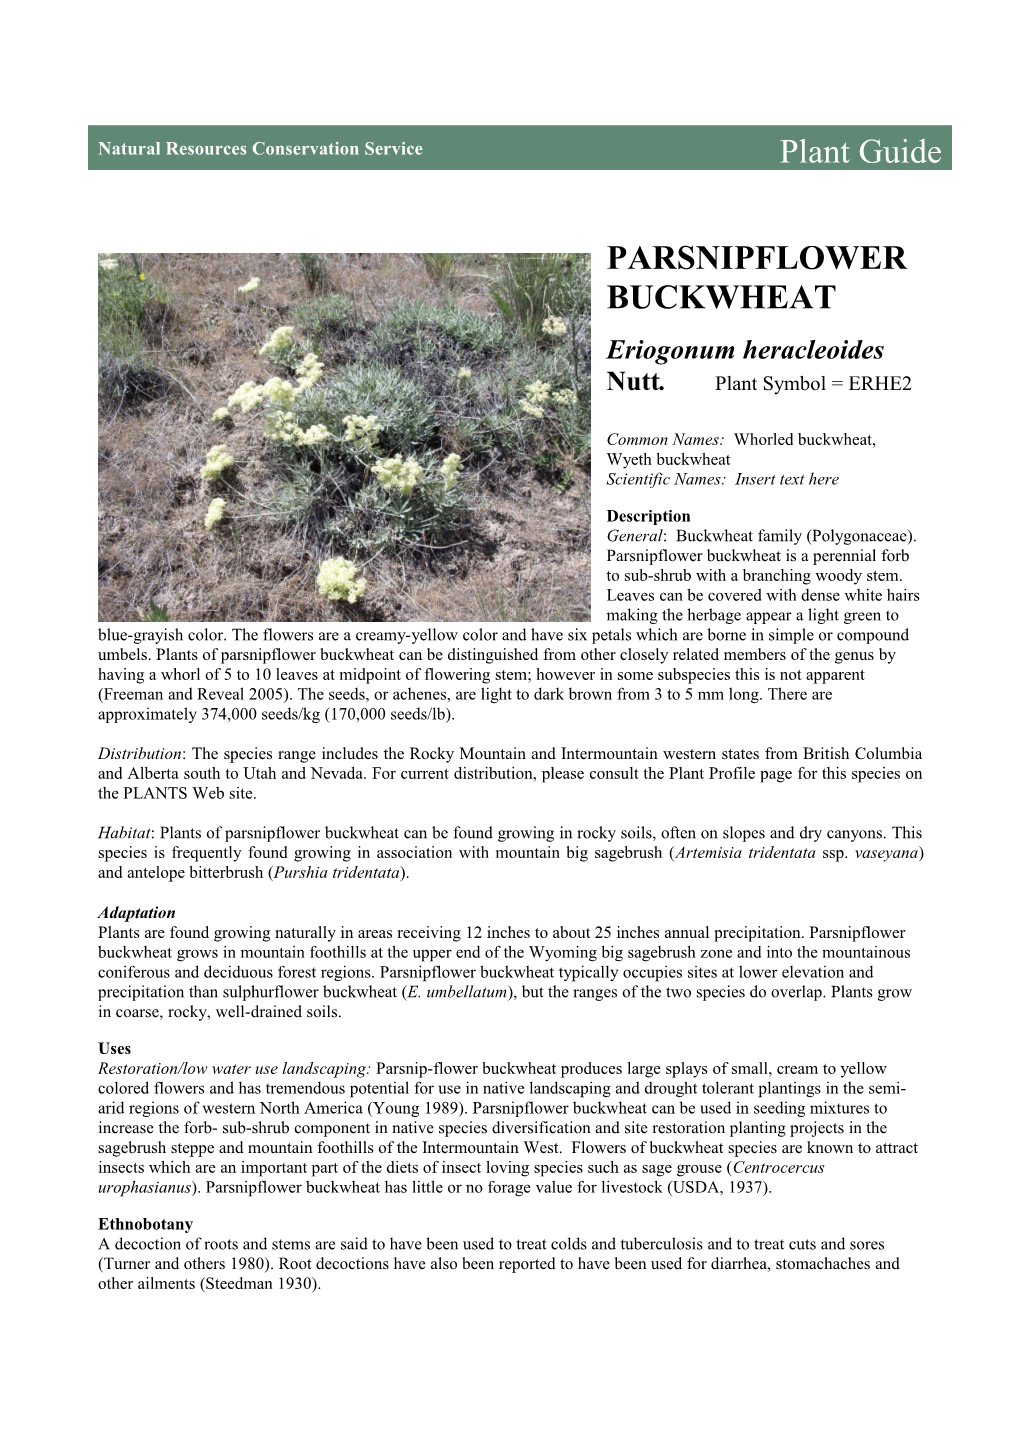 Parsnipflower Buckwheat, Eriogonum Heracleoides, Plant Guide